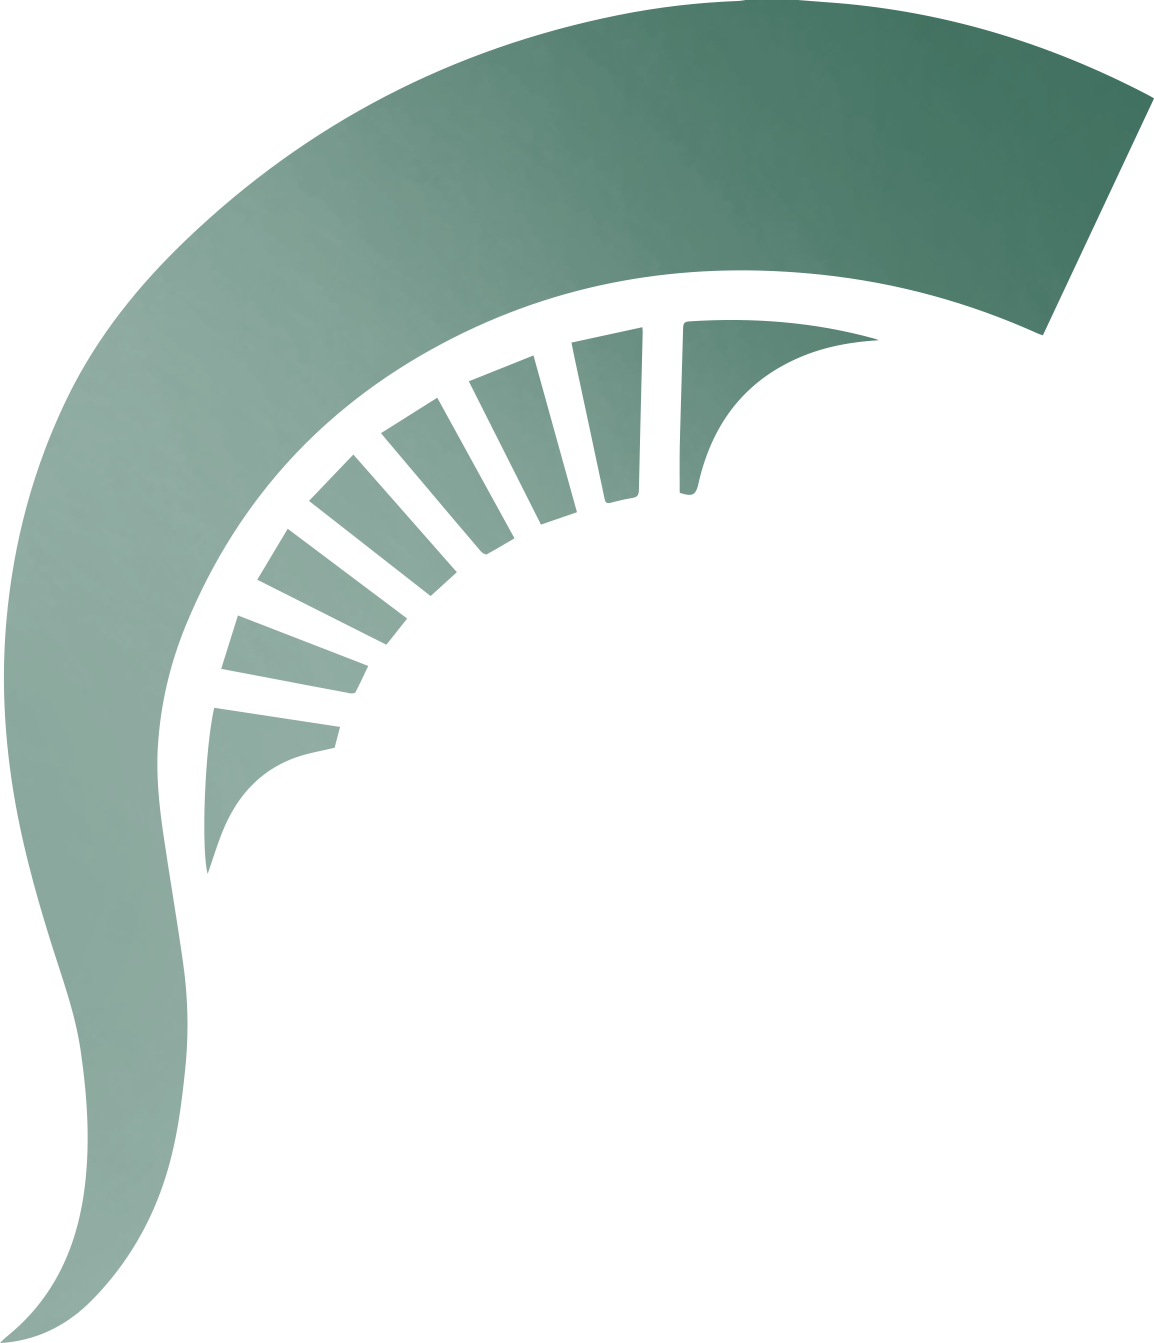 Green Spartan Logo - Design and Visual Identity | The MSU Brand | Michigan State University